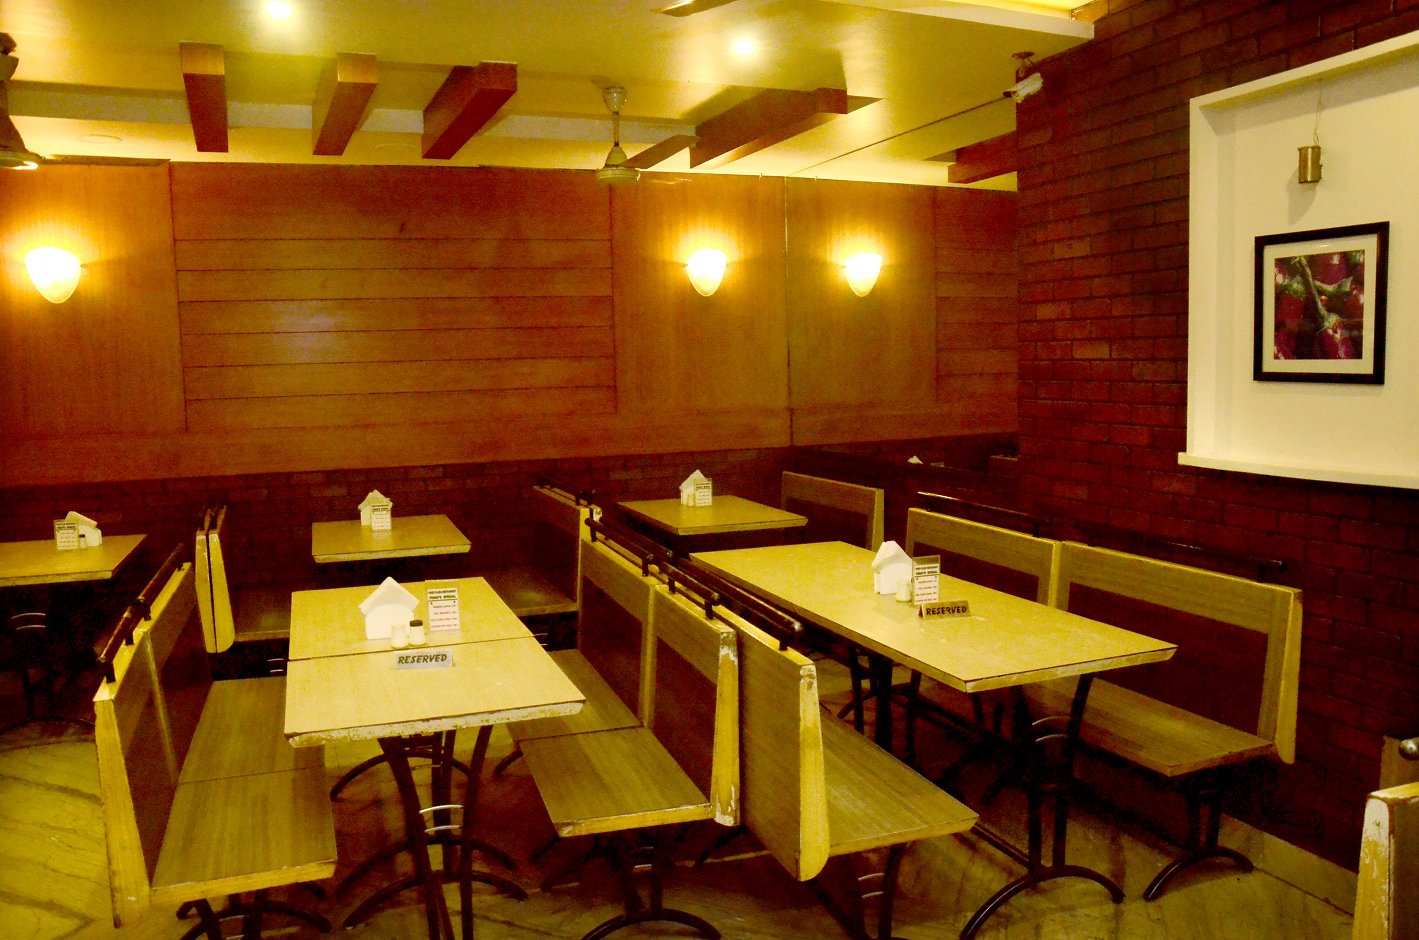 Food Plaza Restaurant